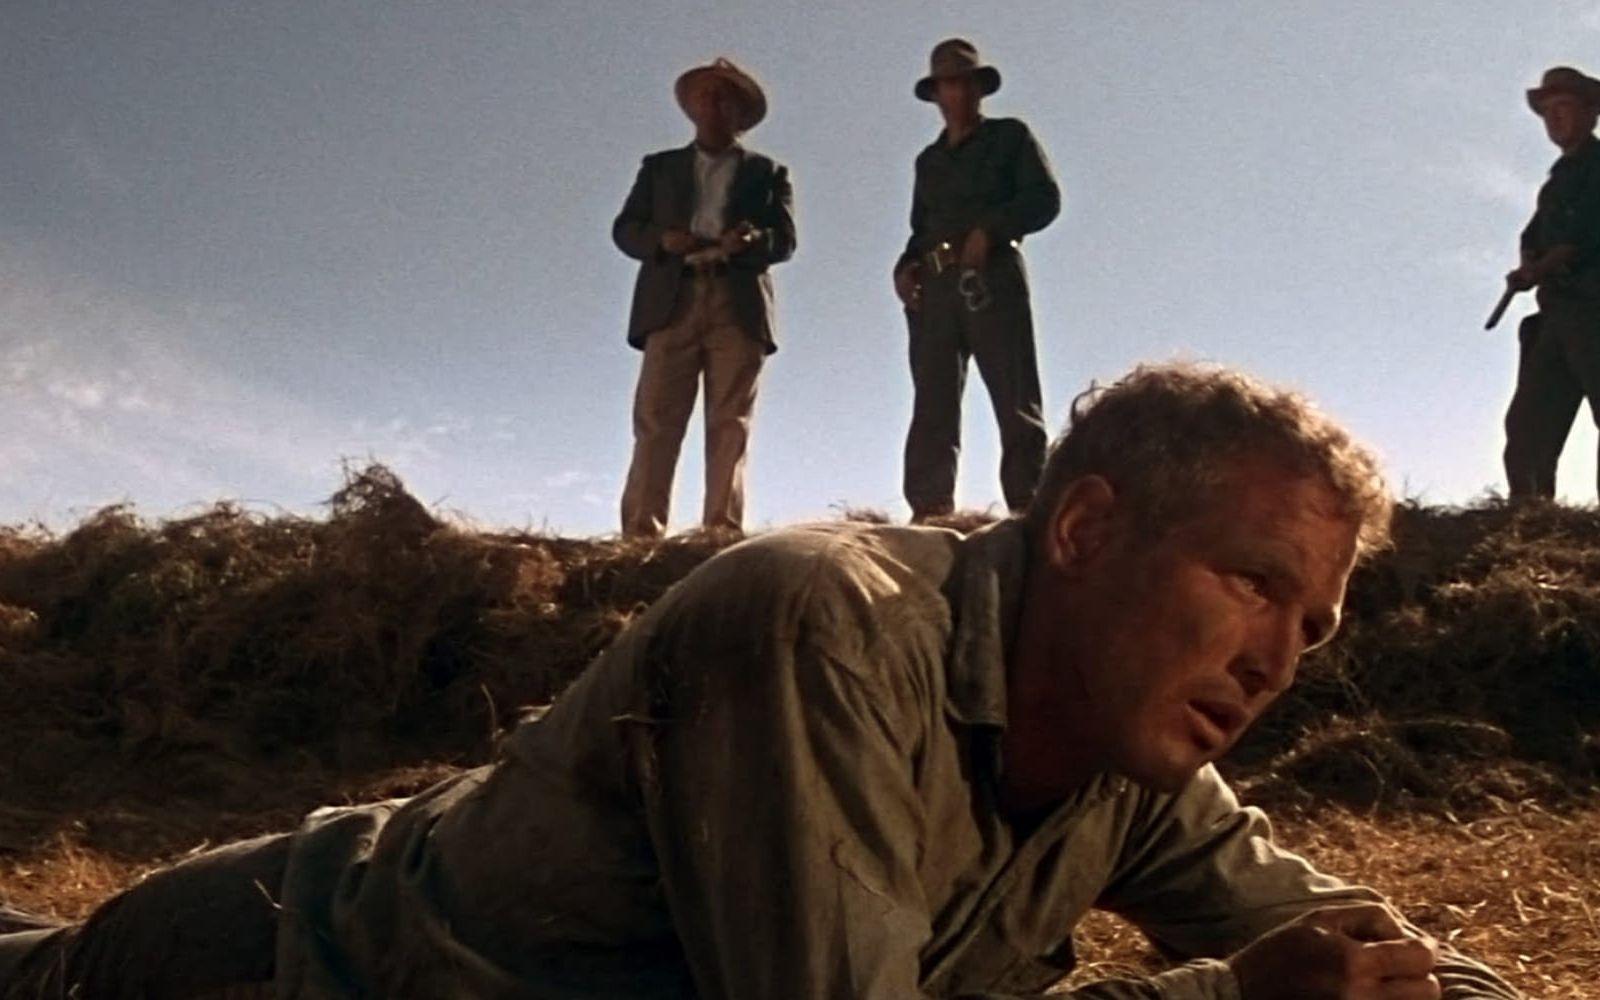 "Calling it your job don't make it right, boss." — Paul Newman som Luke i Cool Hand Luke, 1967